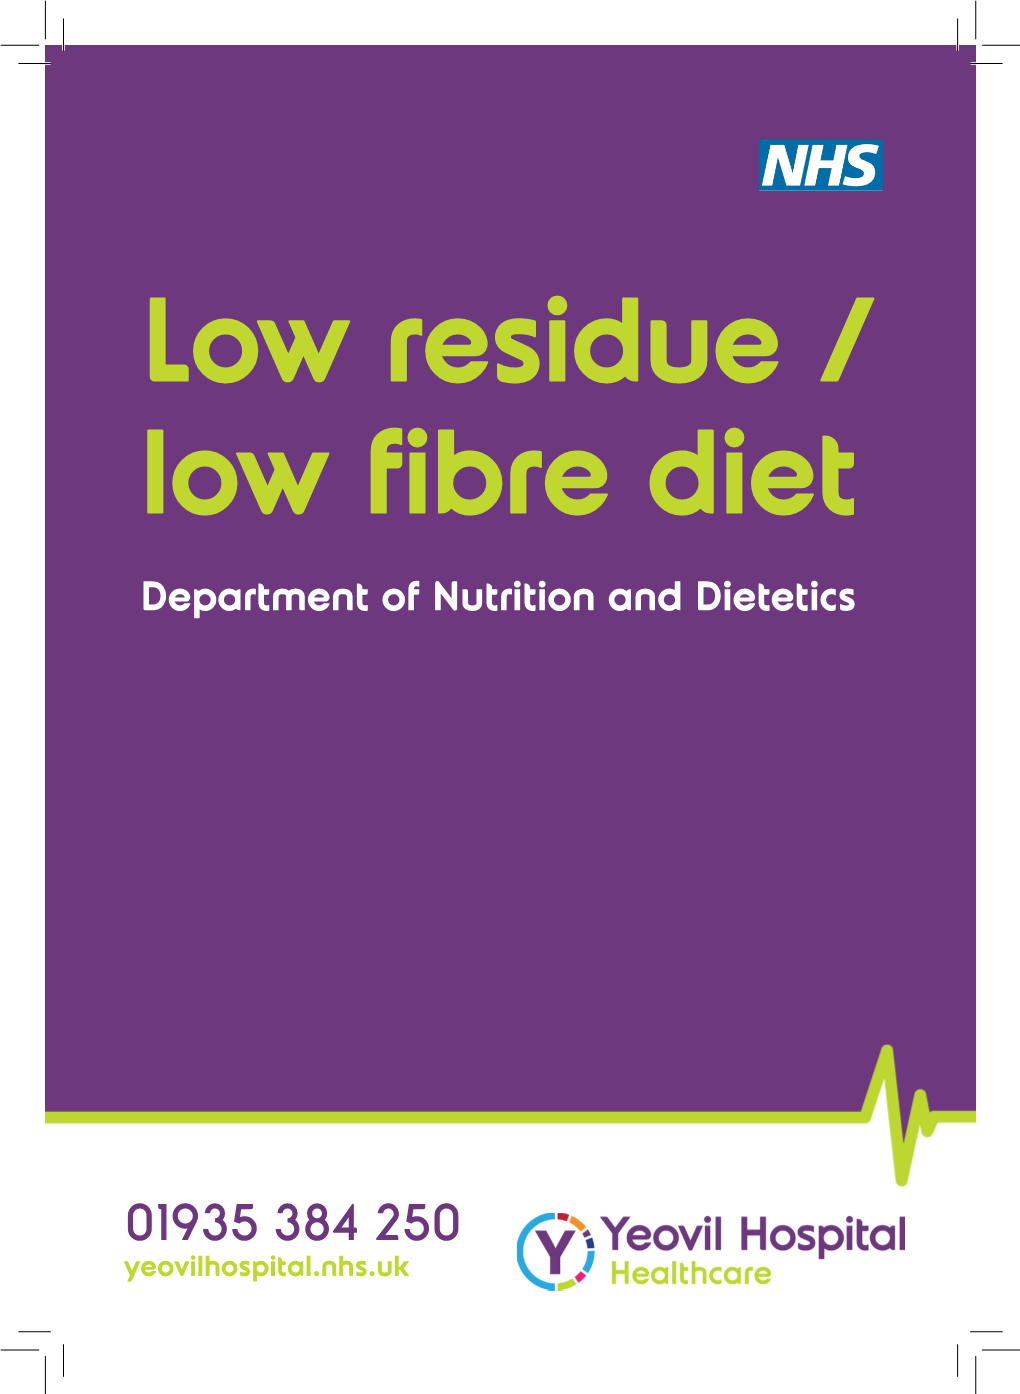 Low Residue, Low Fibre Diet Jan 16